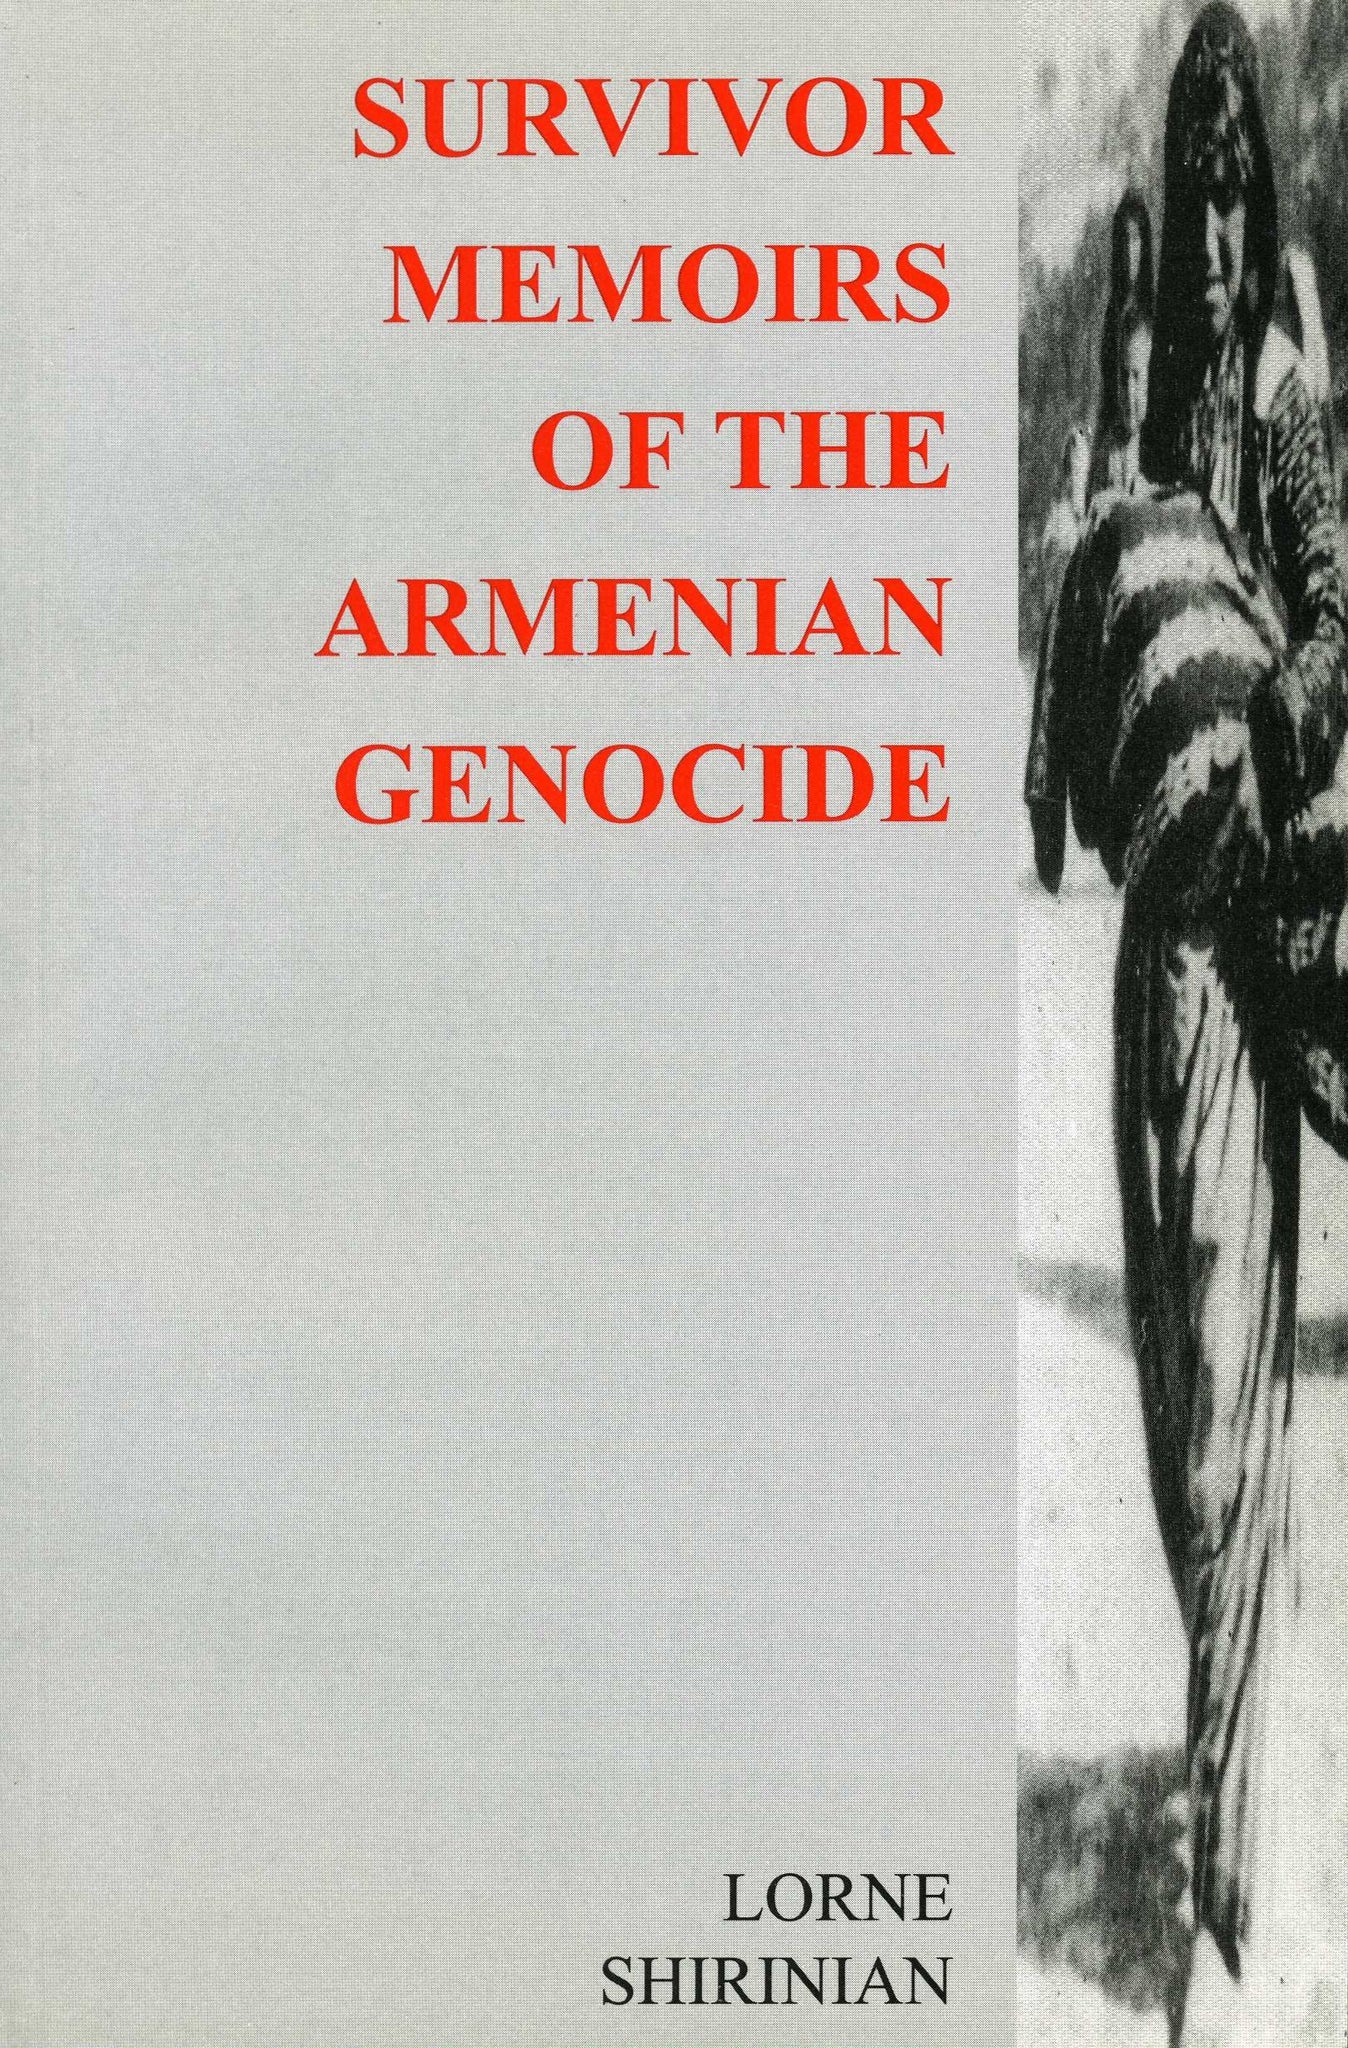 SURVIVOR MEMOIRS OF THE ARMENIAN GENOCIDE